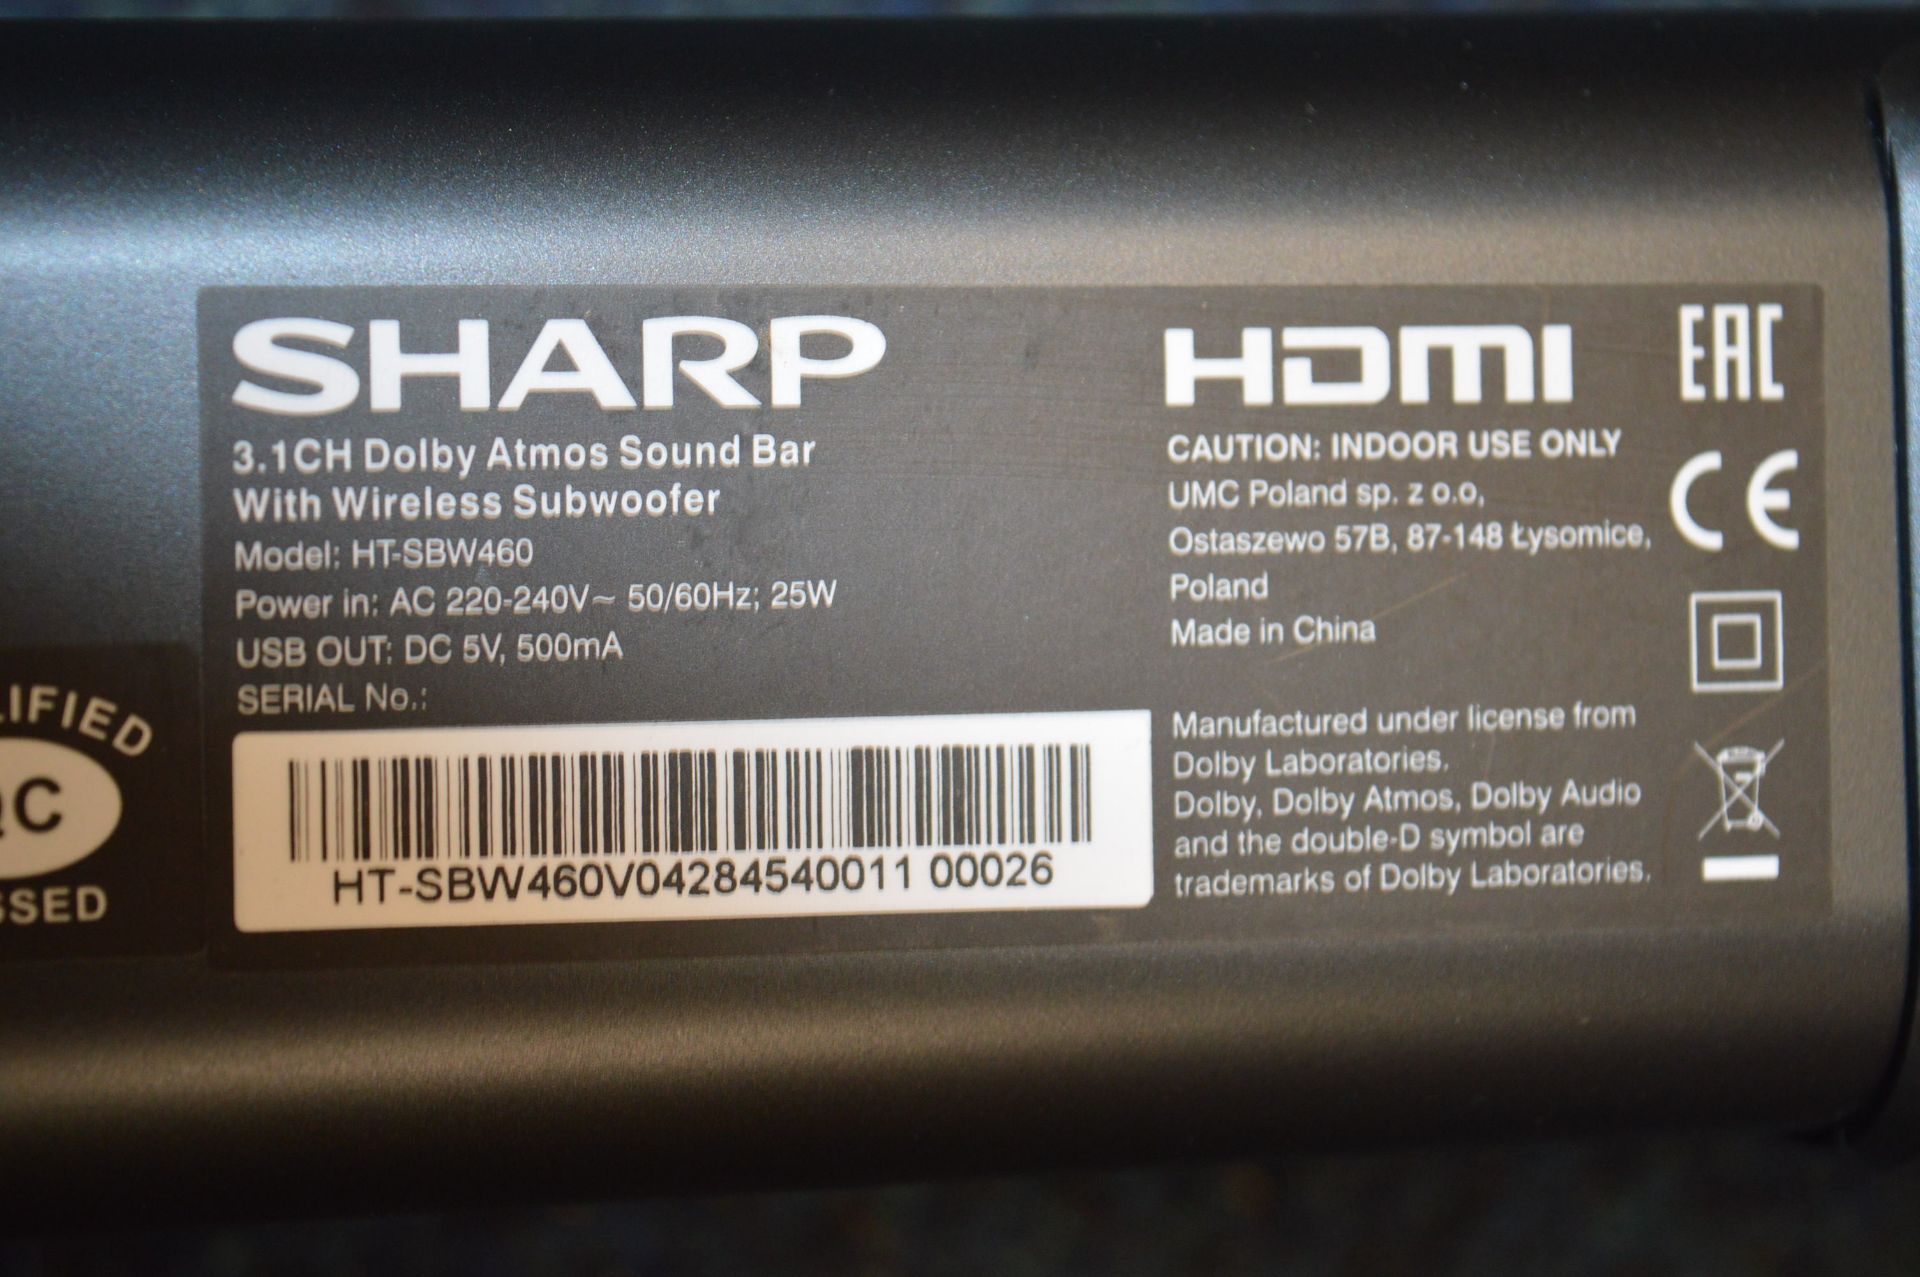 *Sharp 3.1ch Dolby Atmos Soundbar - Image 2 of 2